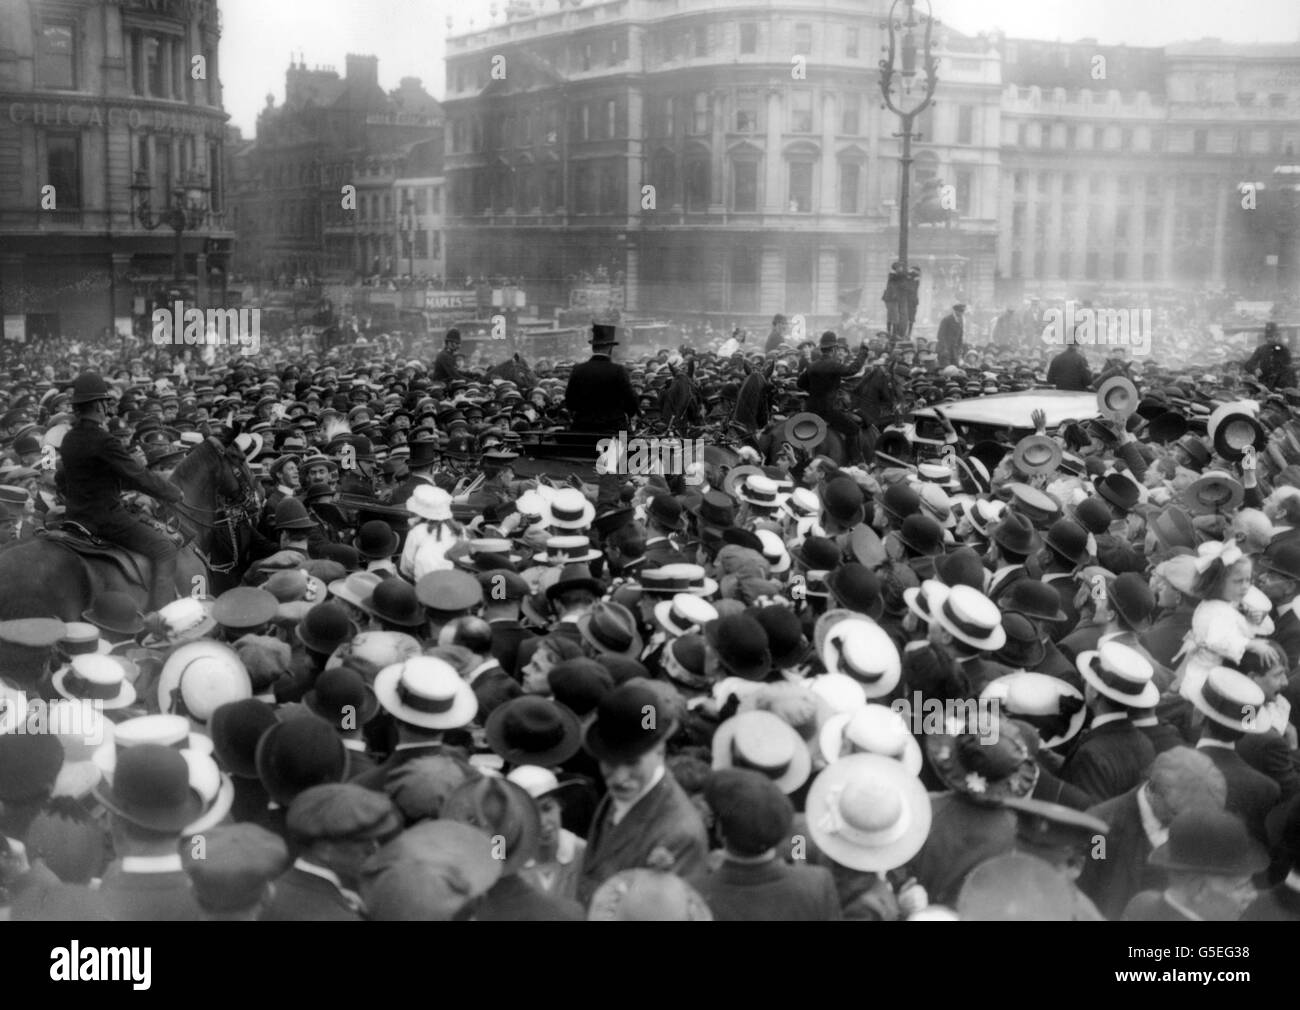 Erster Weltkrieg - British Army - Victoria Cross Held Sergeant O'Leary - London Parade. London begrüßt Sergeant O'Leary VC im Jahr 1915. Stockfoto